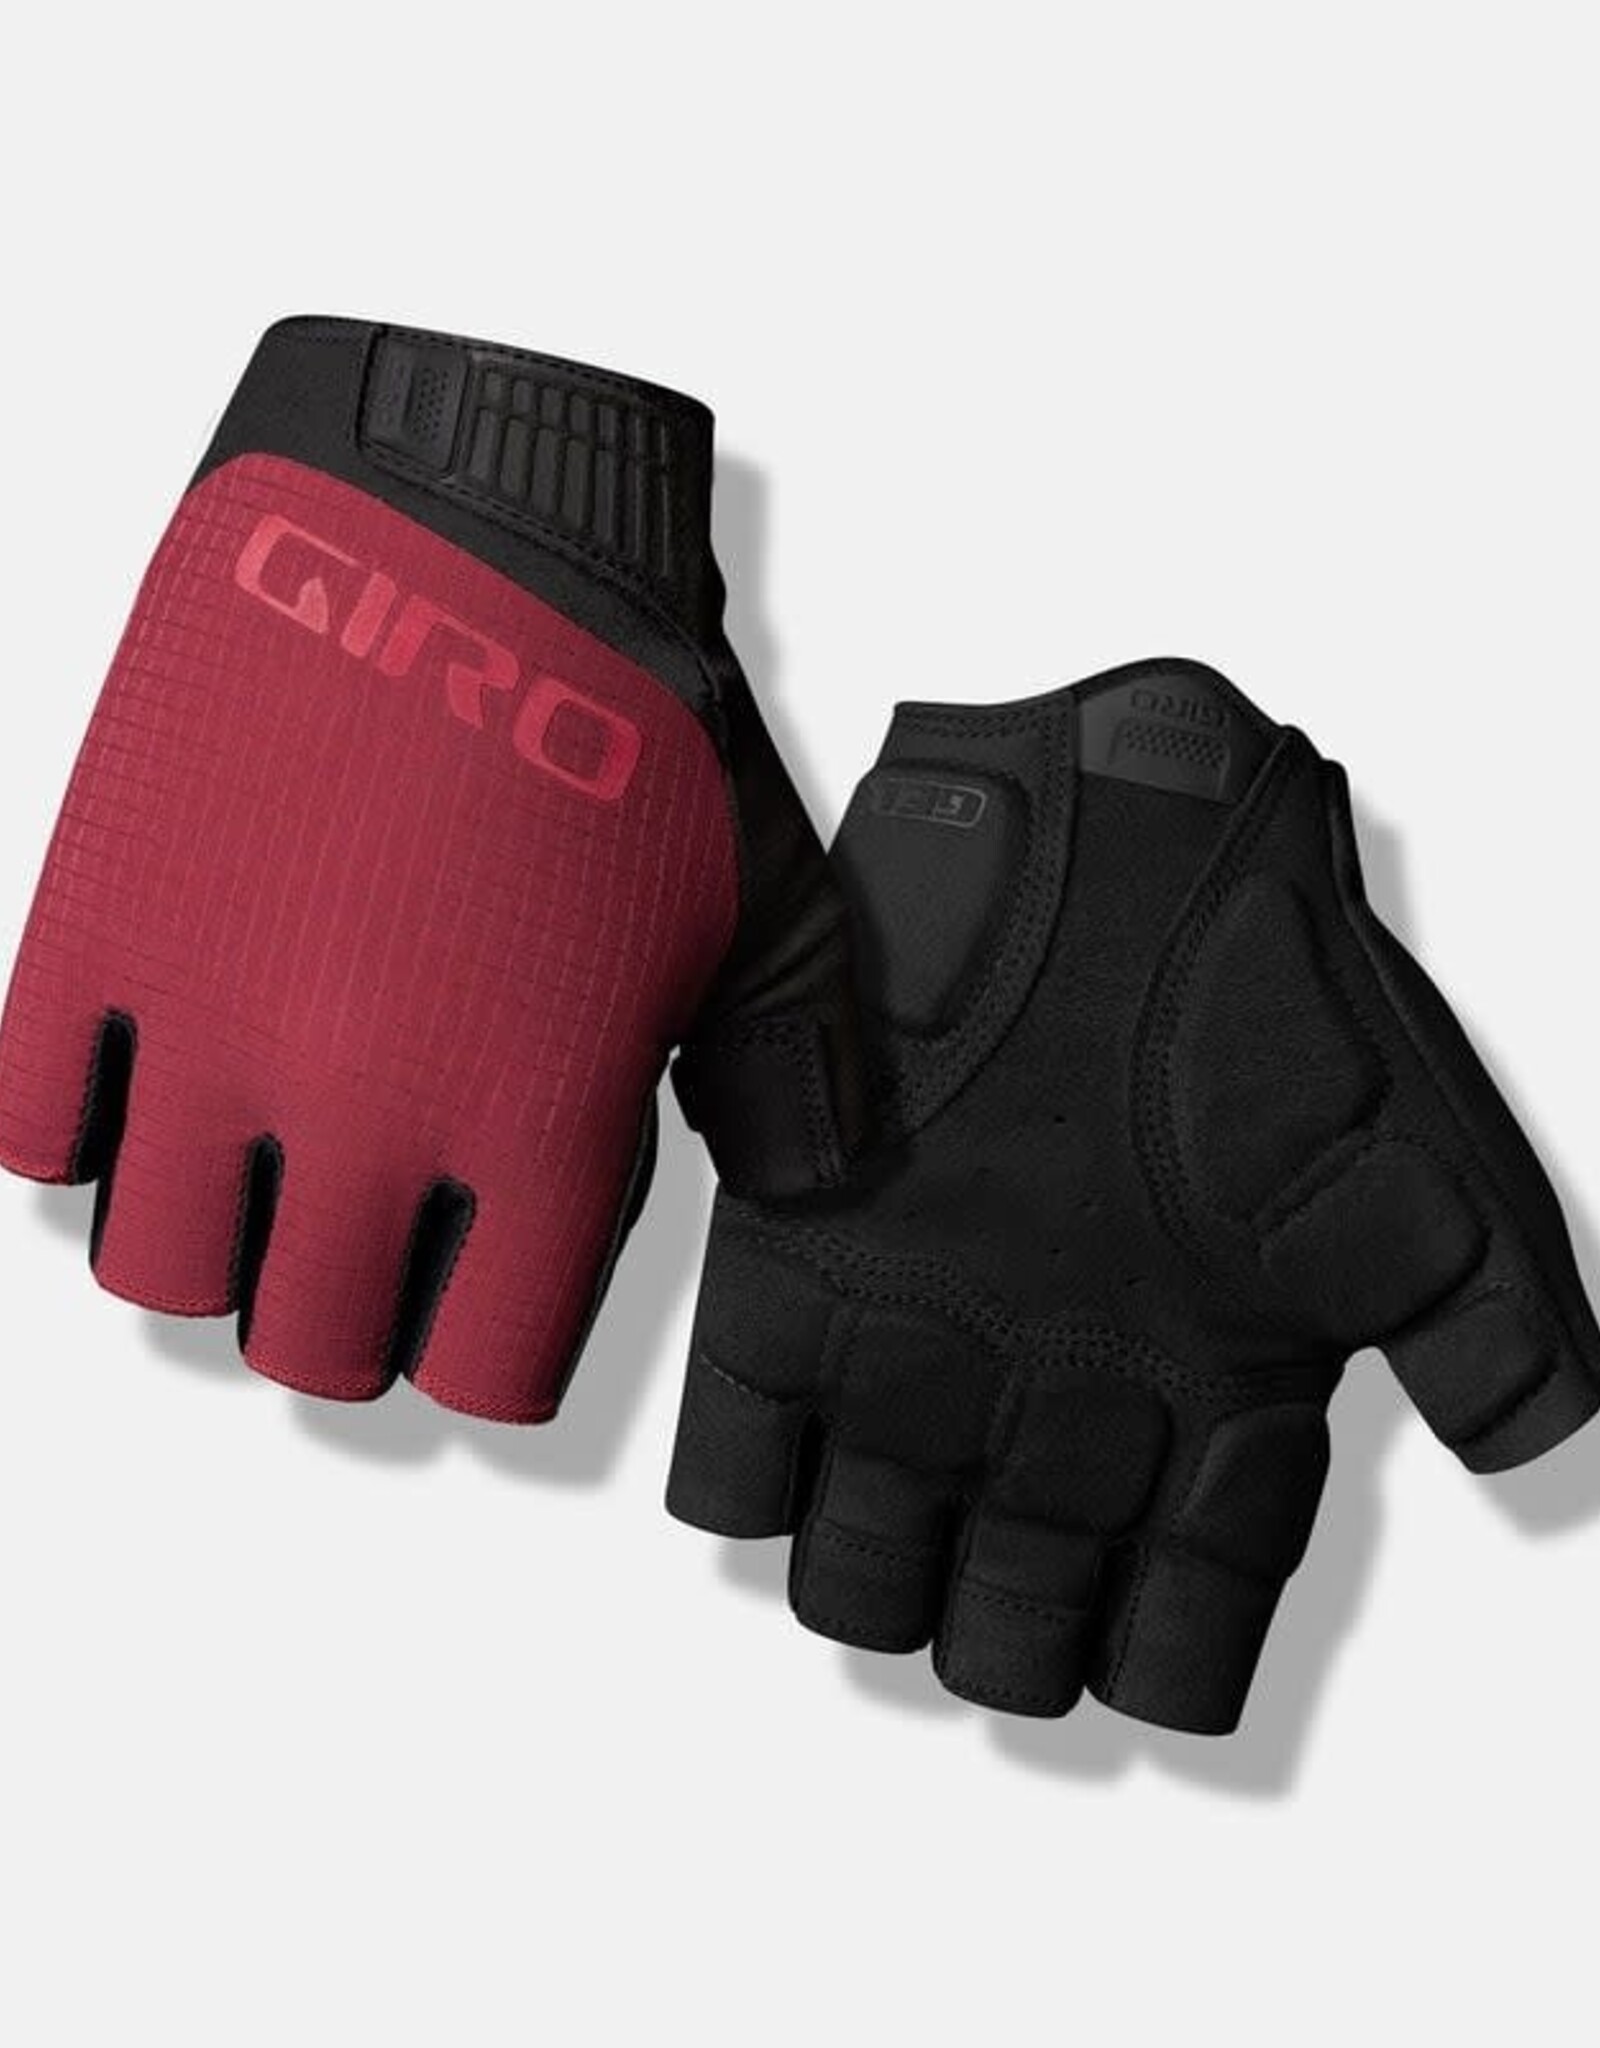 Giro Giro Women's Tessa II Gel Glove Dark Cherry/Raspberry L